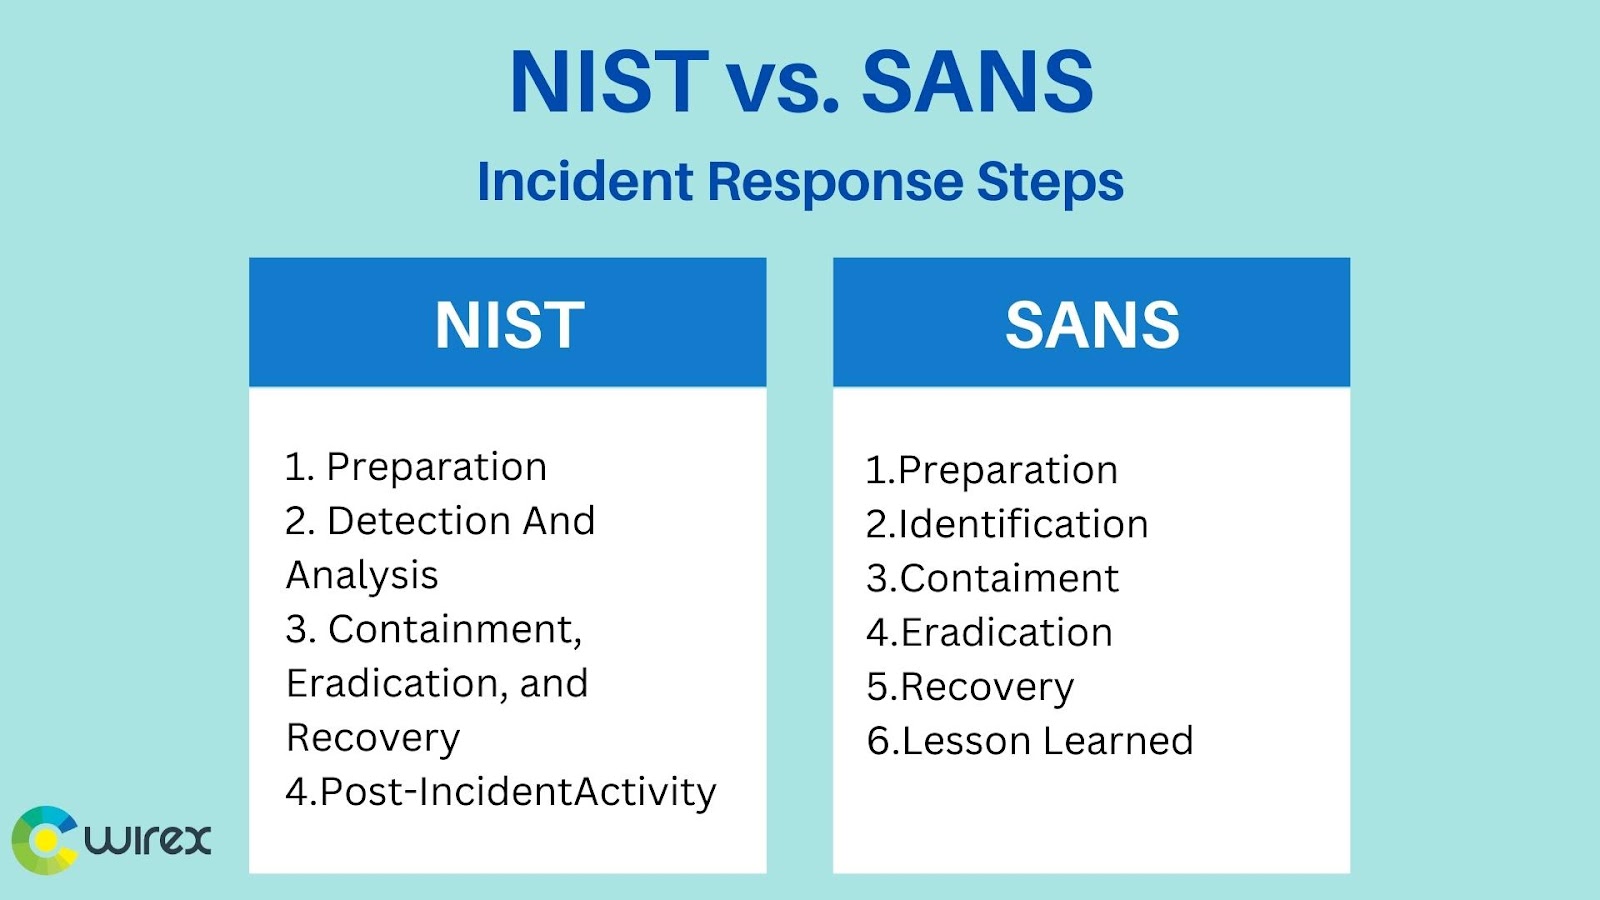 NIST vs SANS Incident Response